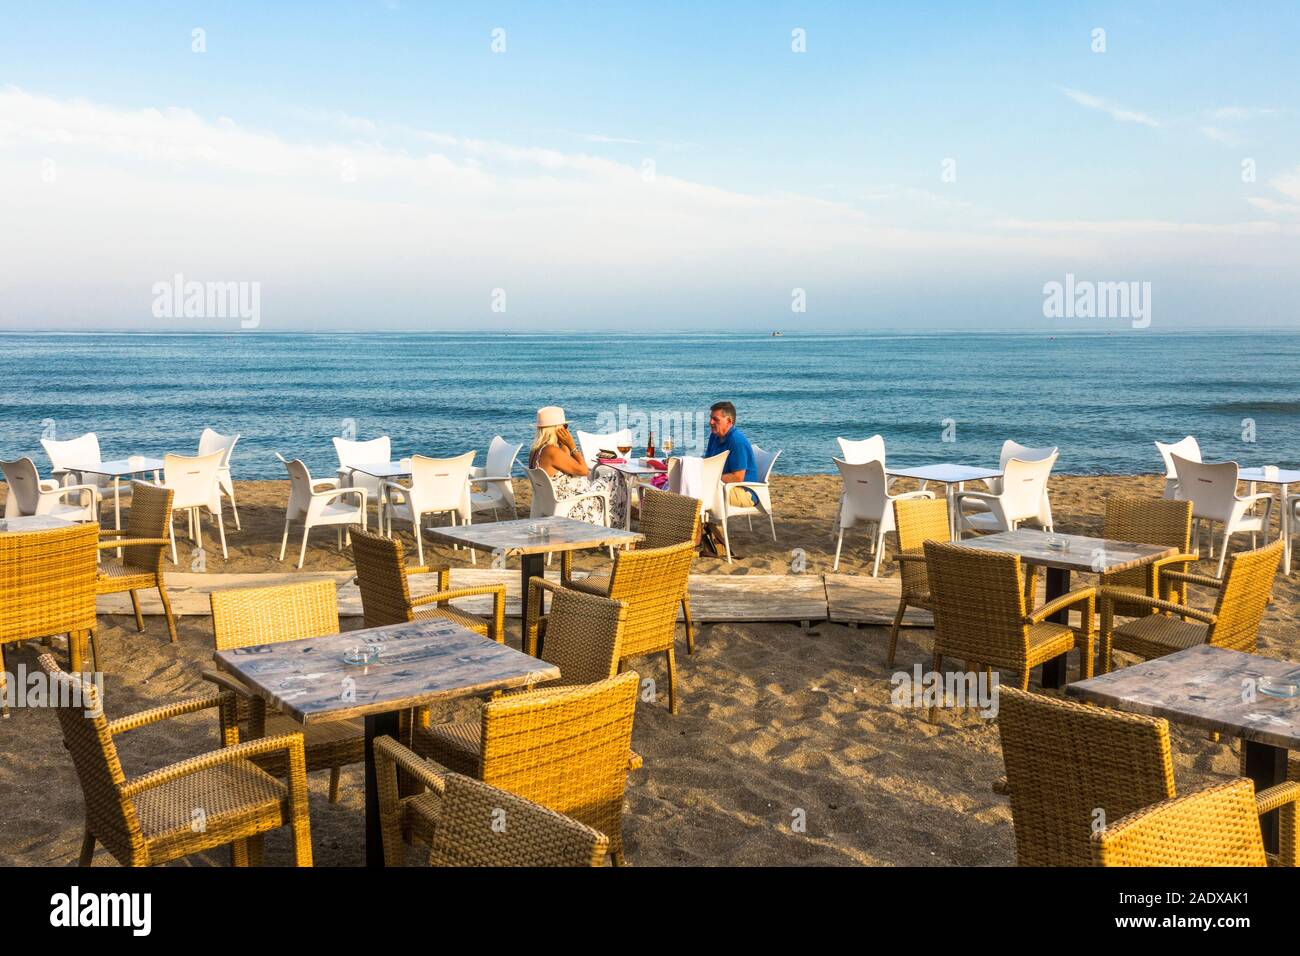 Couple alone on beach terrace, at mediterranean seaside. Costa del sol, Malaga, Spain. Stock Photo